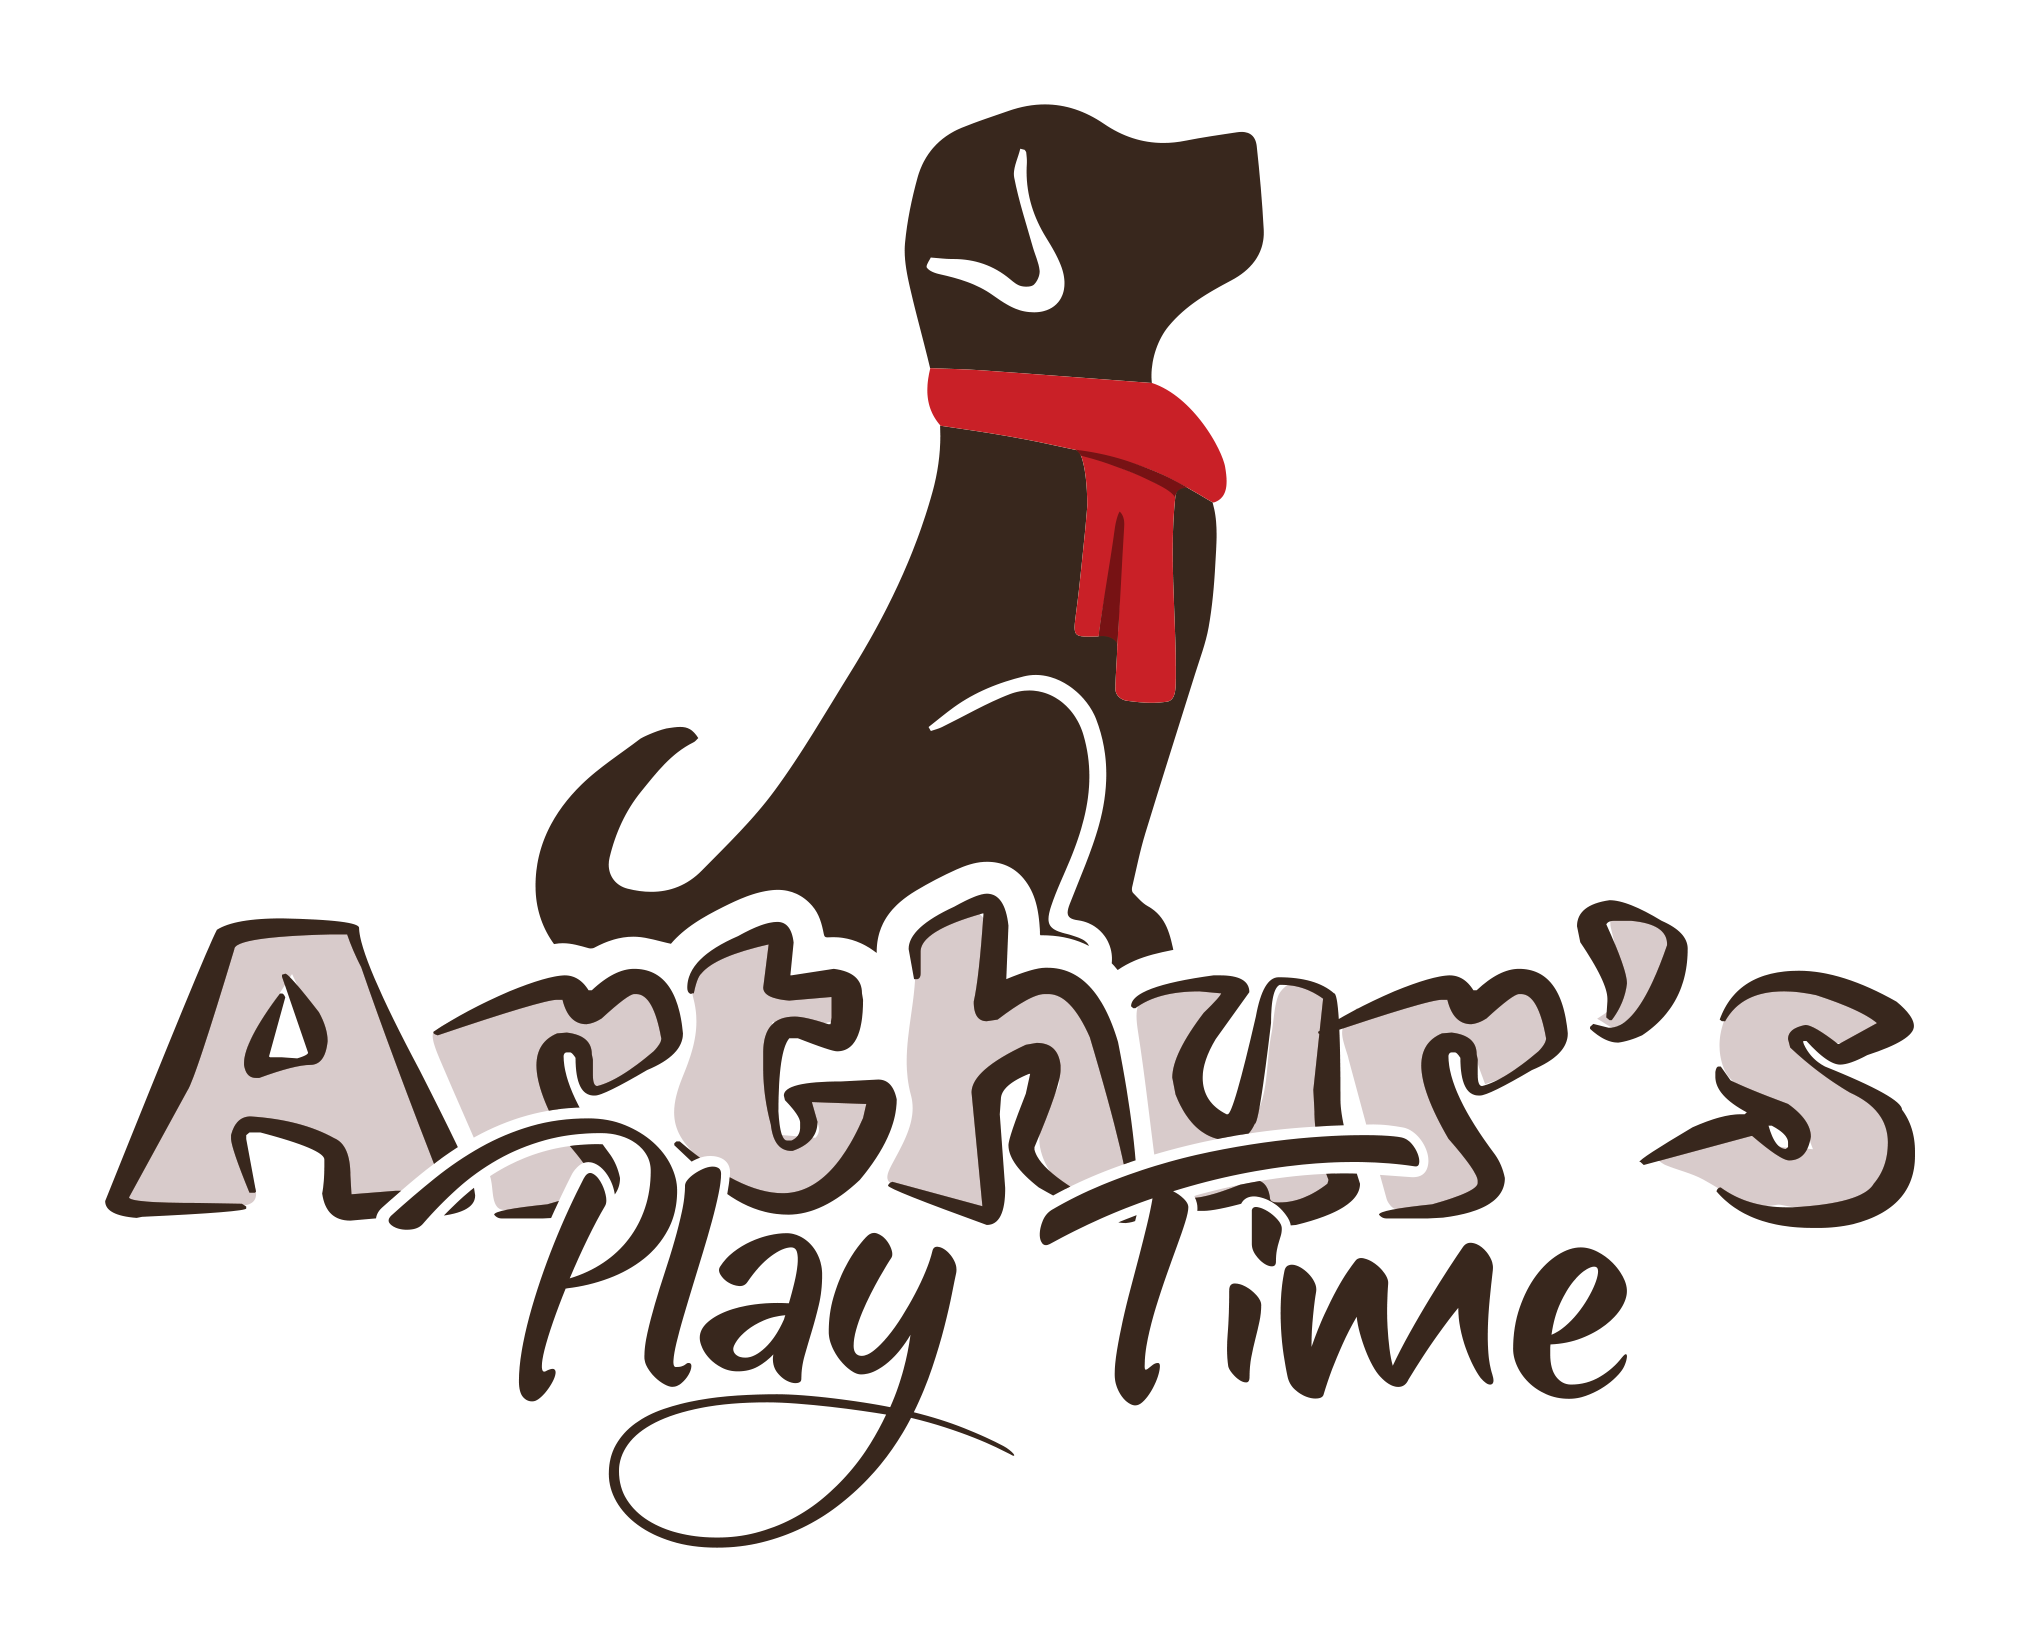 Arhur's Playtime